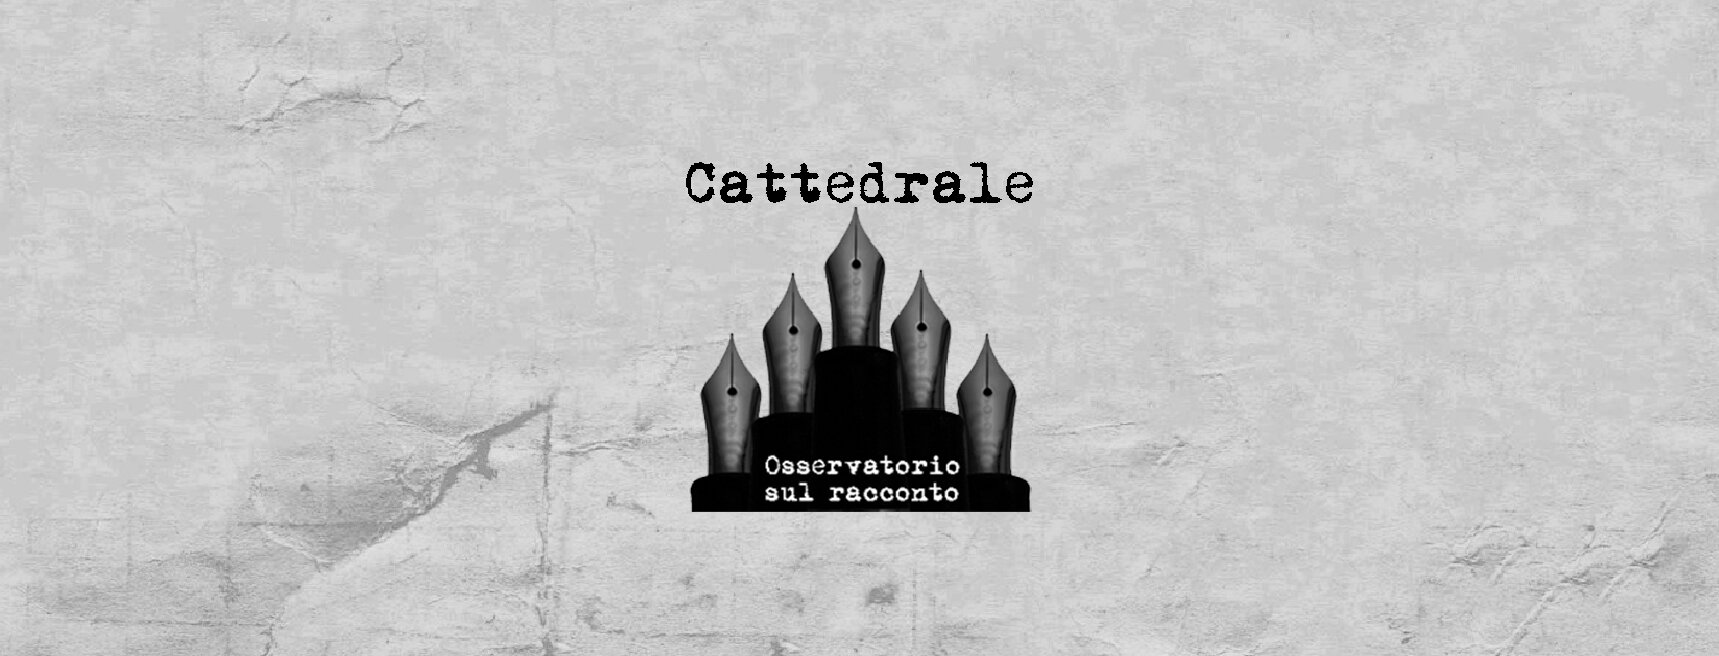 Cattedrale1